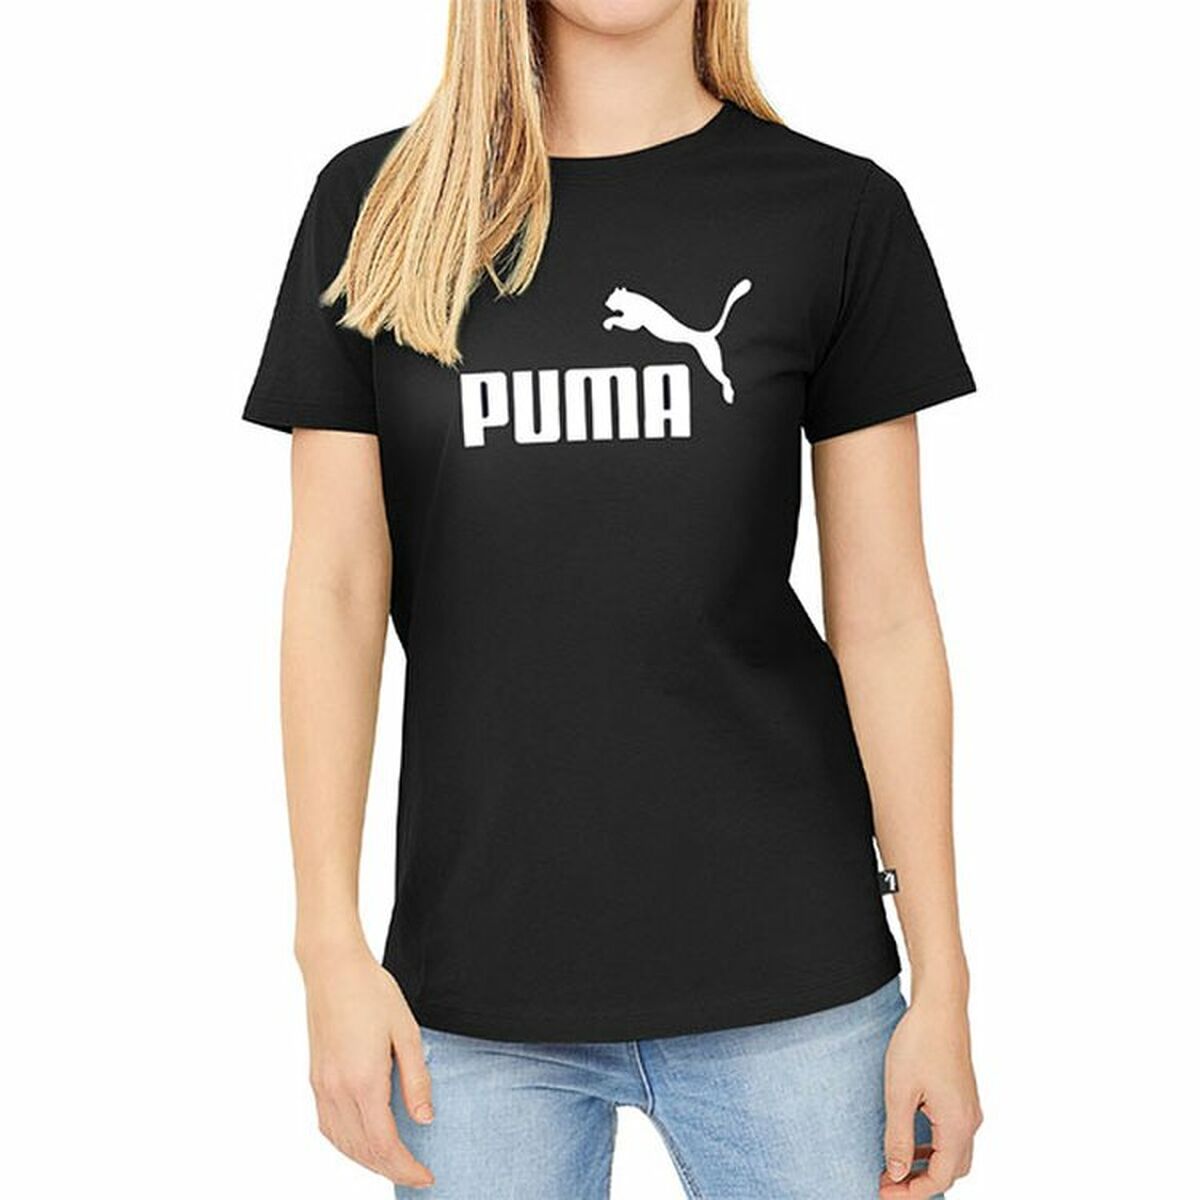 T-shirt à manches courtes femme Puma LOGO TEE 586774 01 Noir